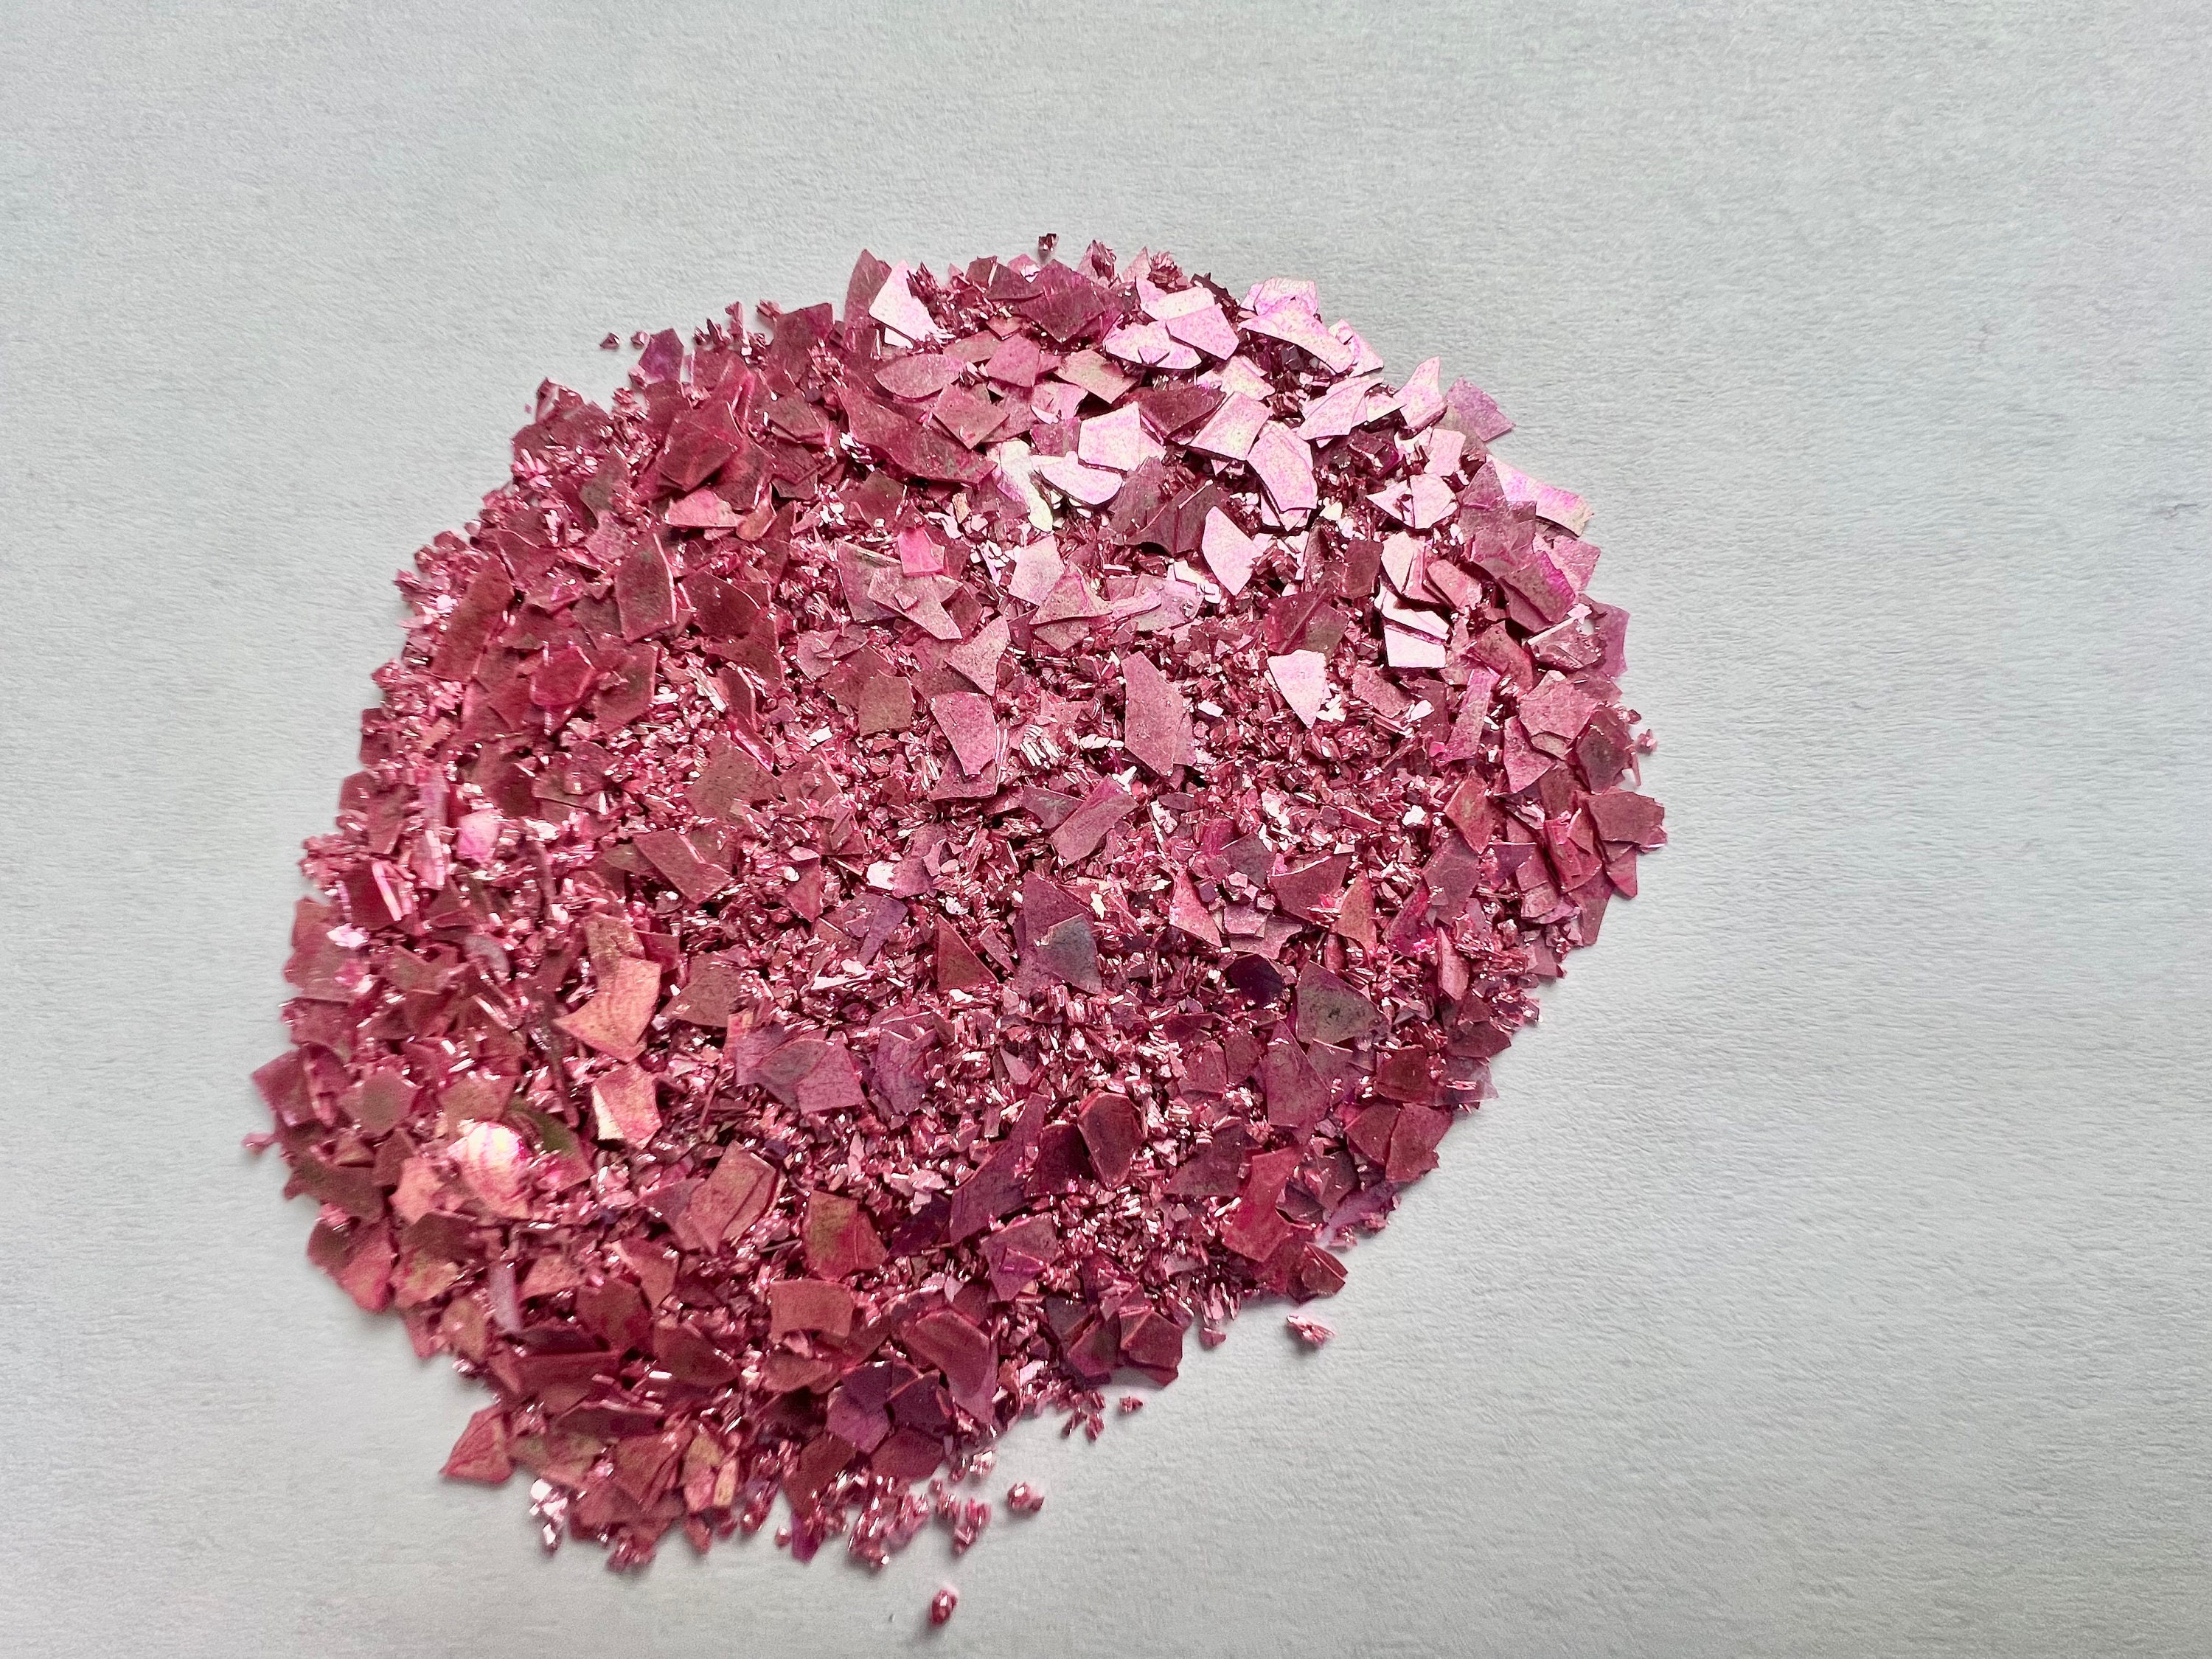 German Glass Glitter, Pale Pink